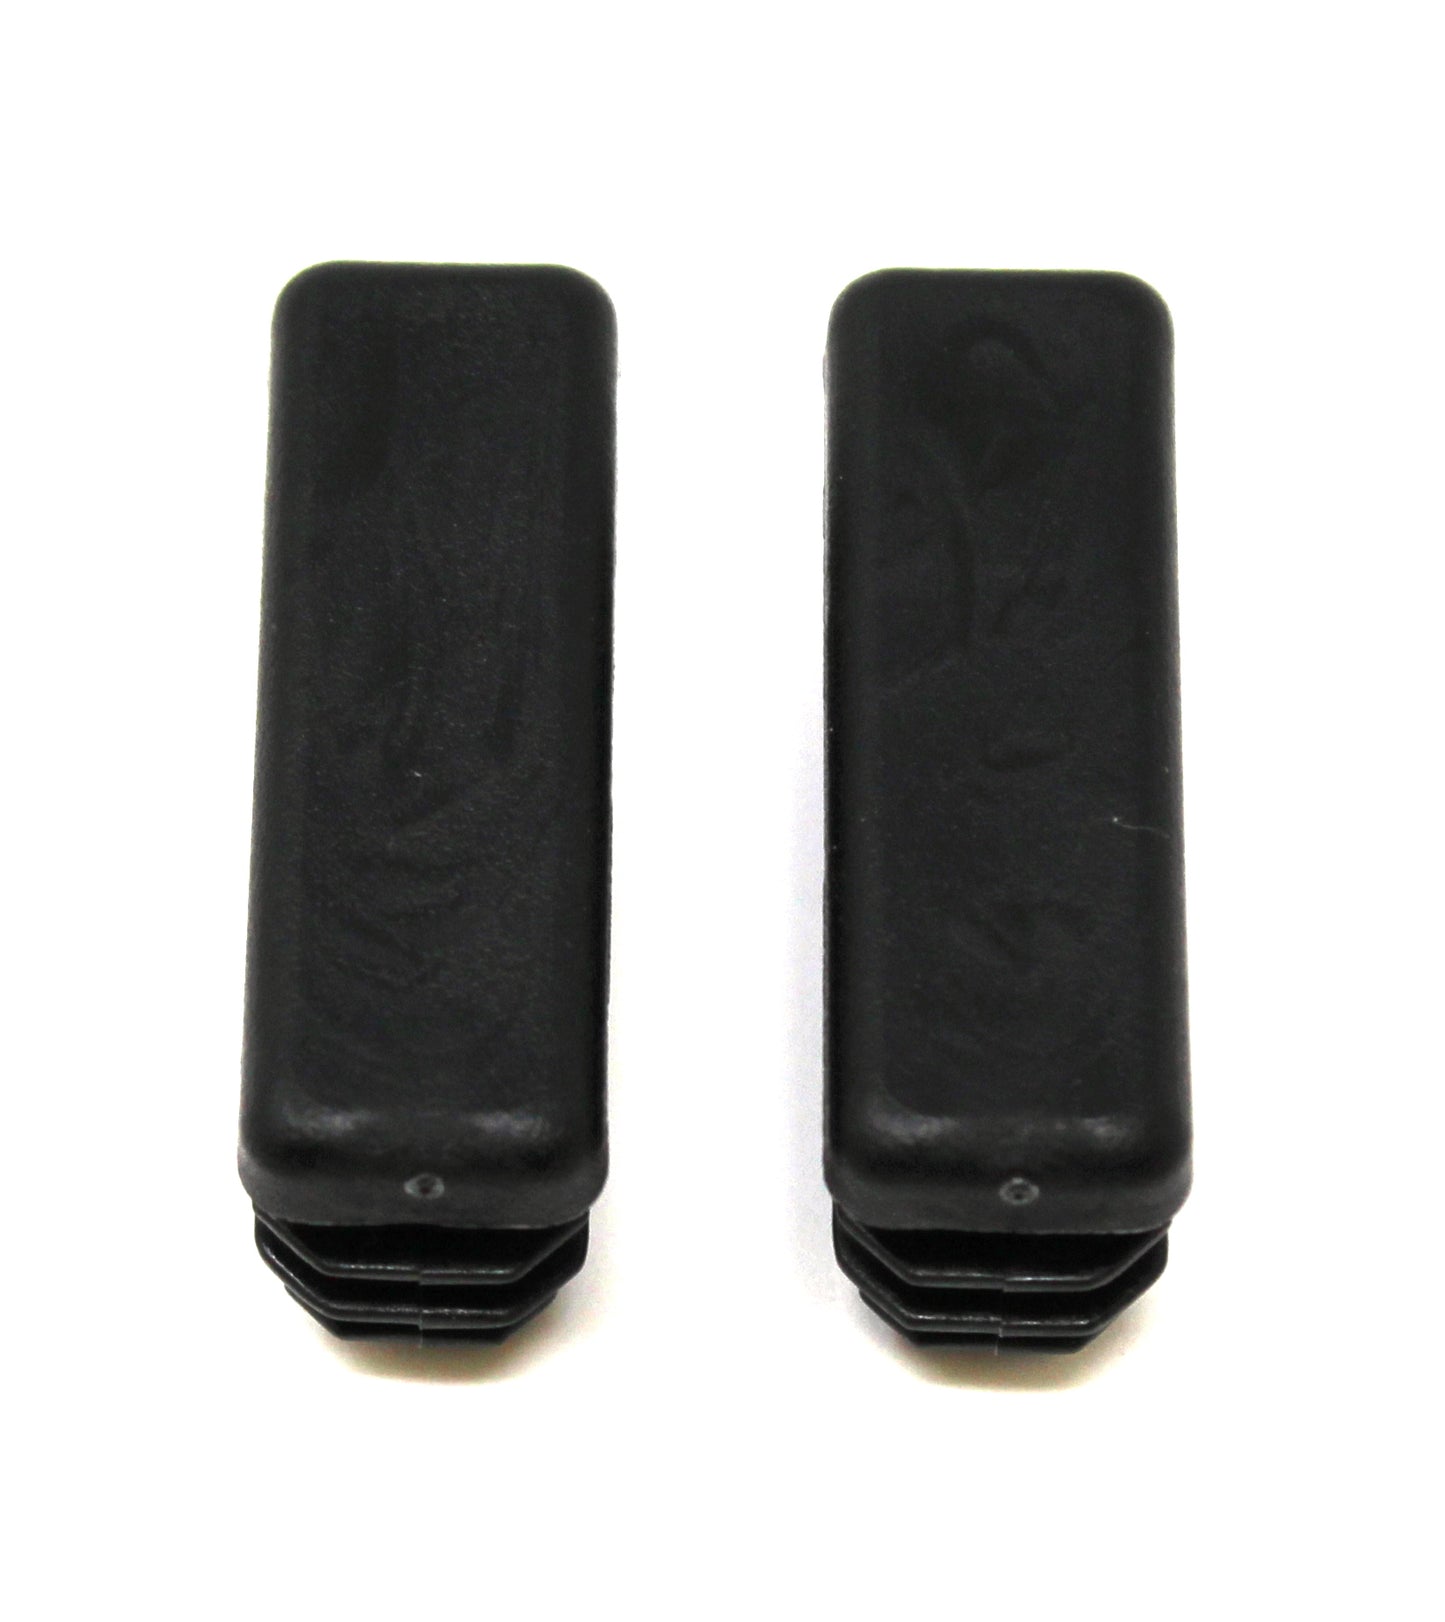 Tubing Caps 1/2 x 1-1/2 inch Rectangle Black Plastic, Finishing Plug, Pipe Tubing End Cap, Durable Chair Glide Universal